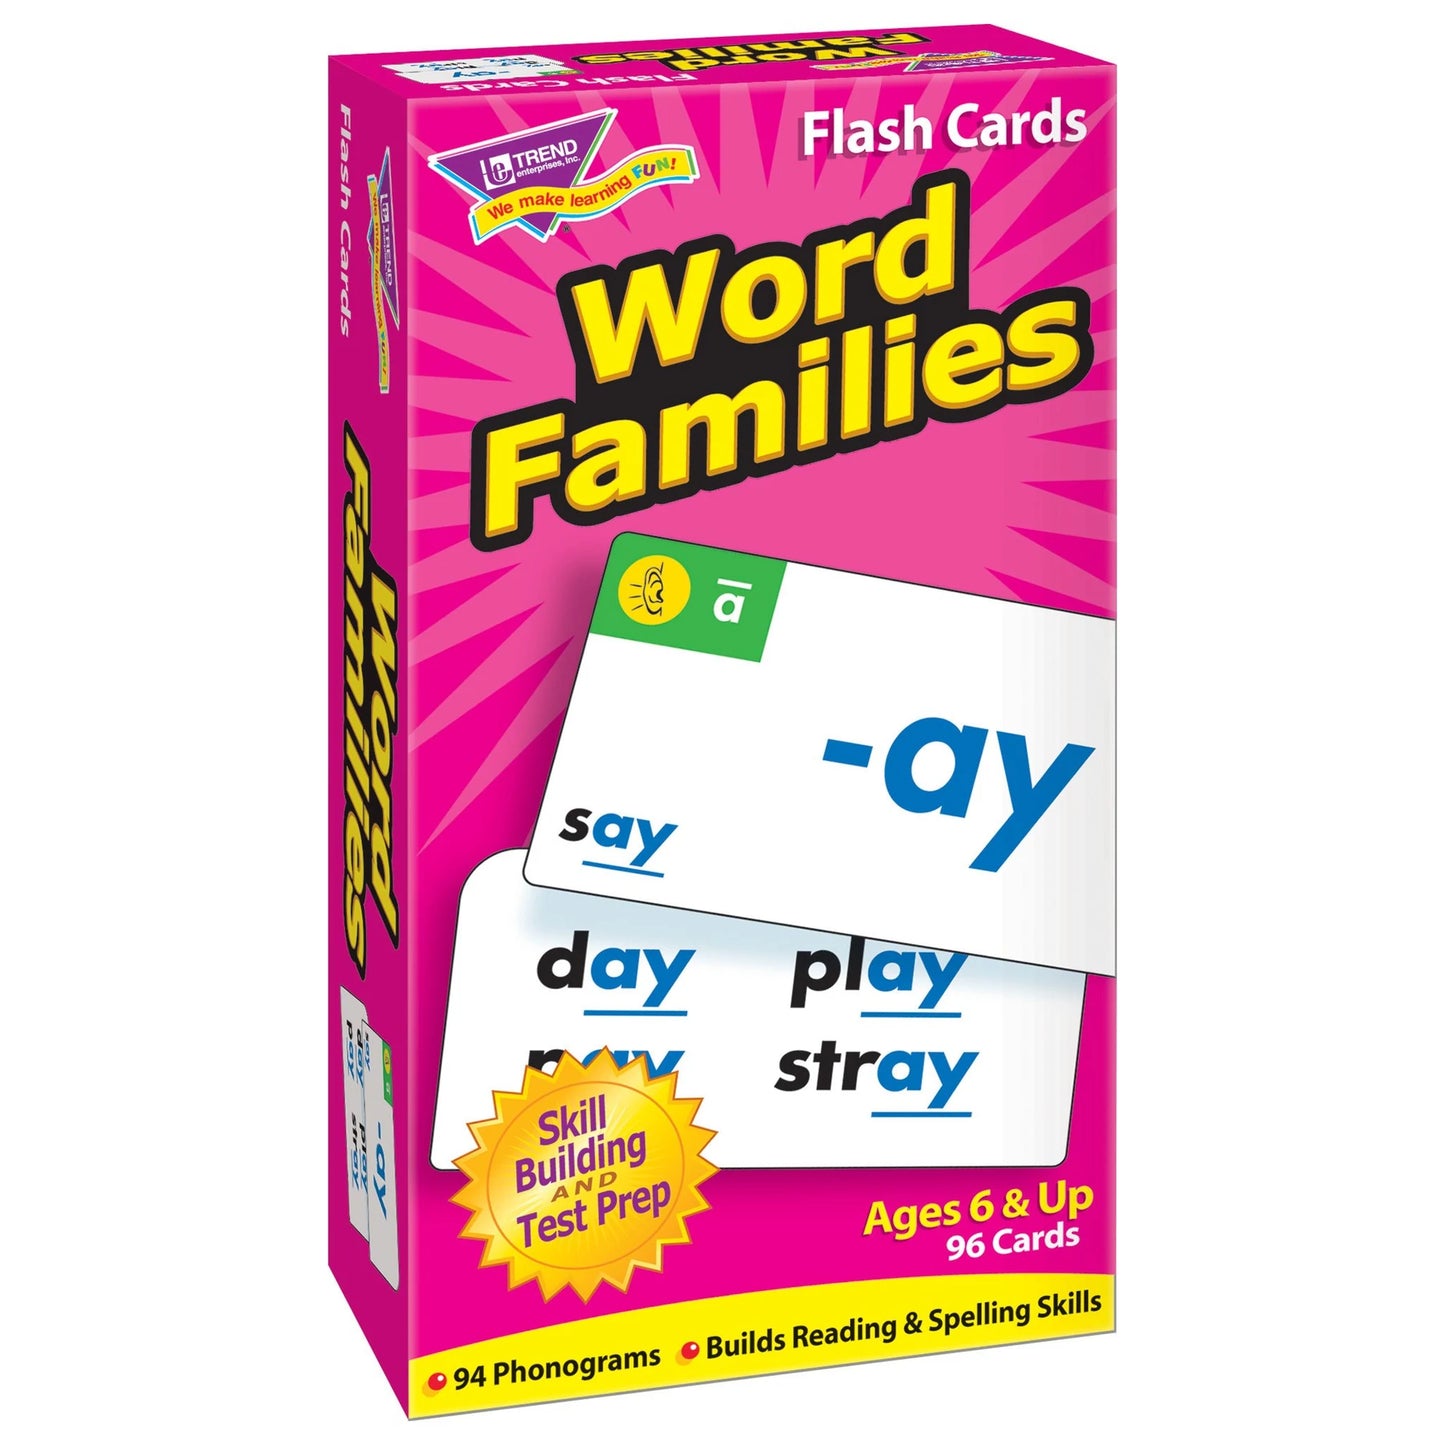 Word Famililes Flashcards